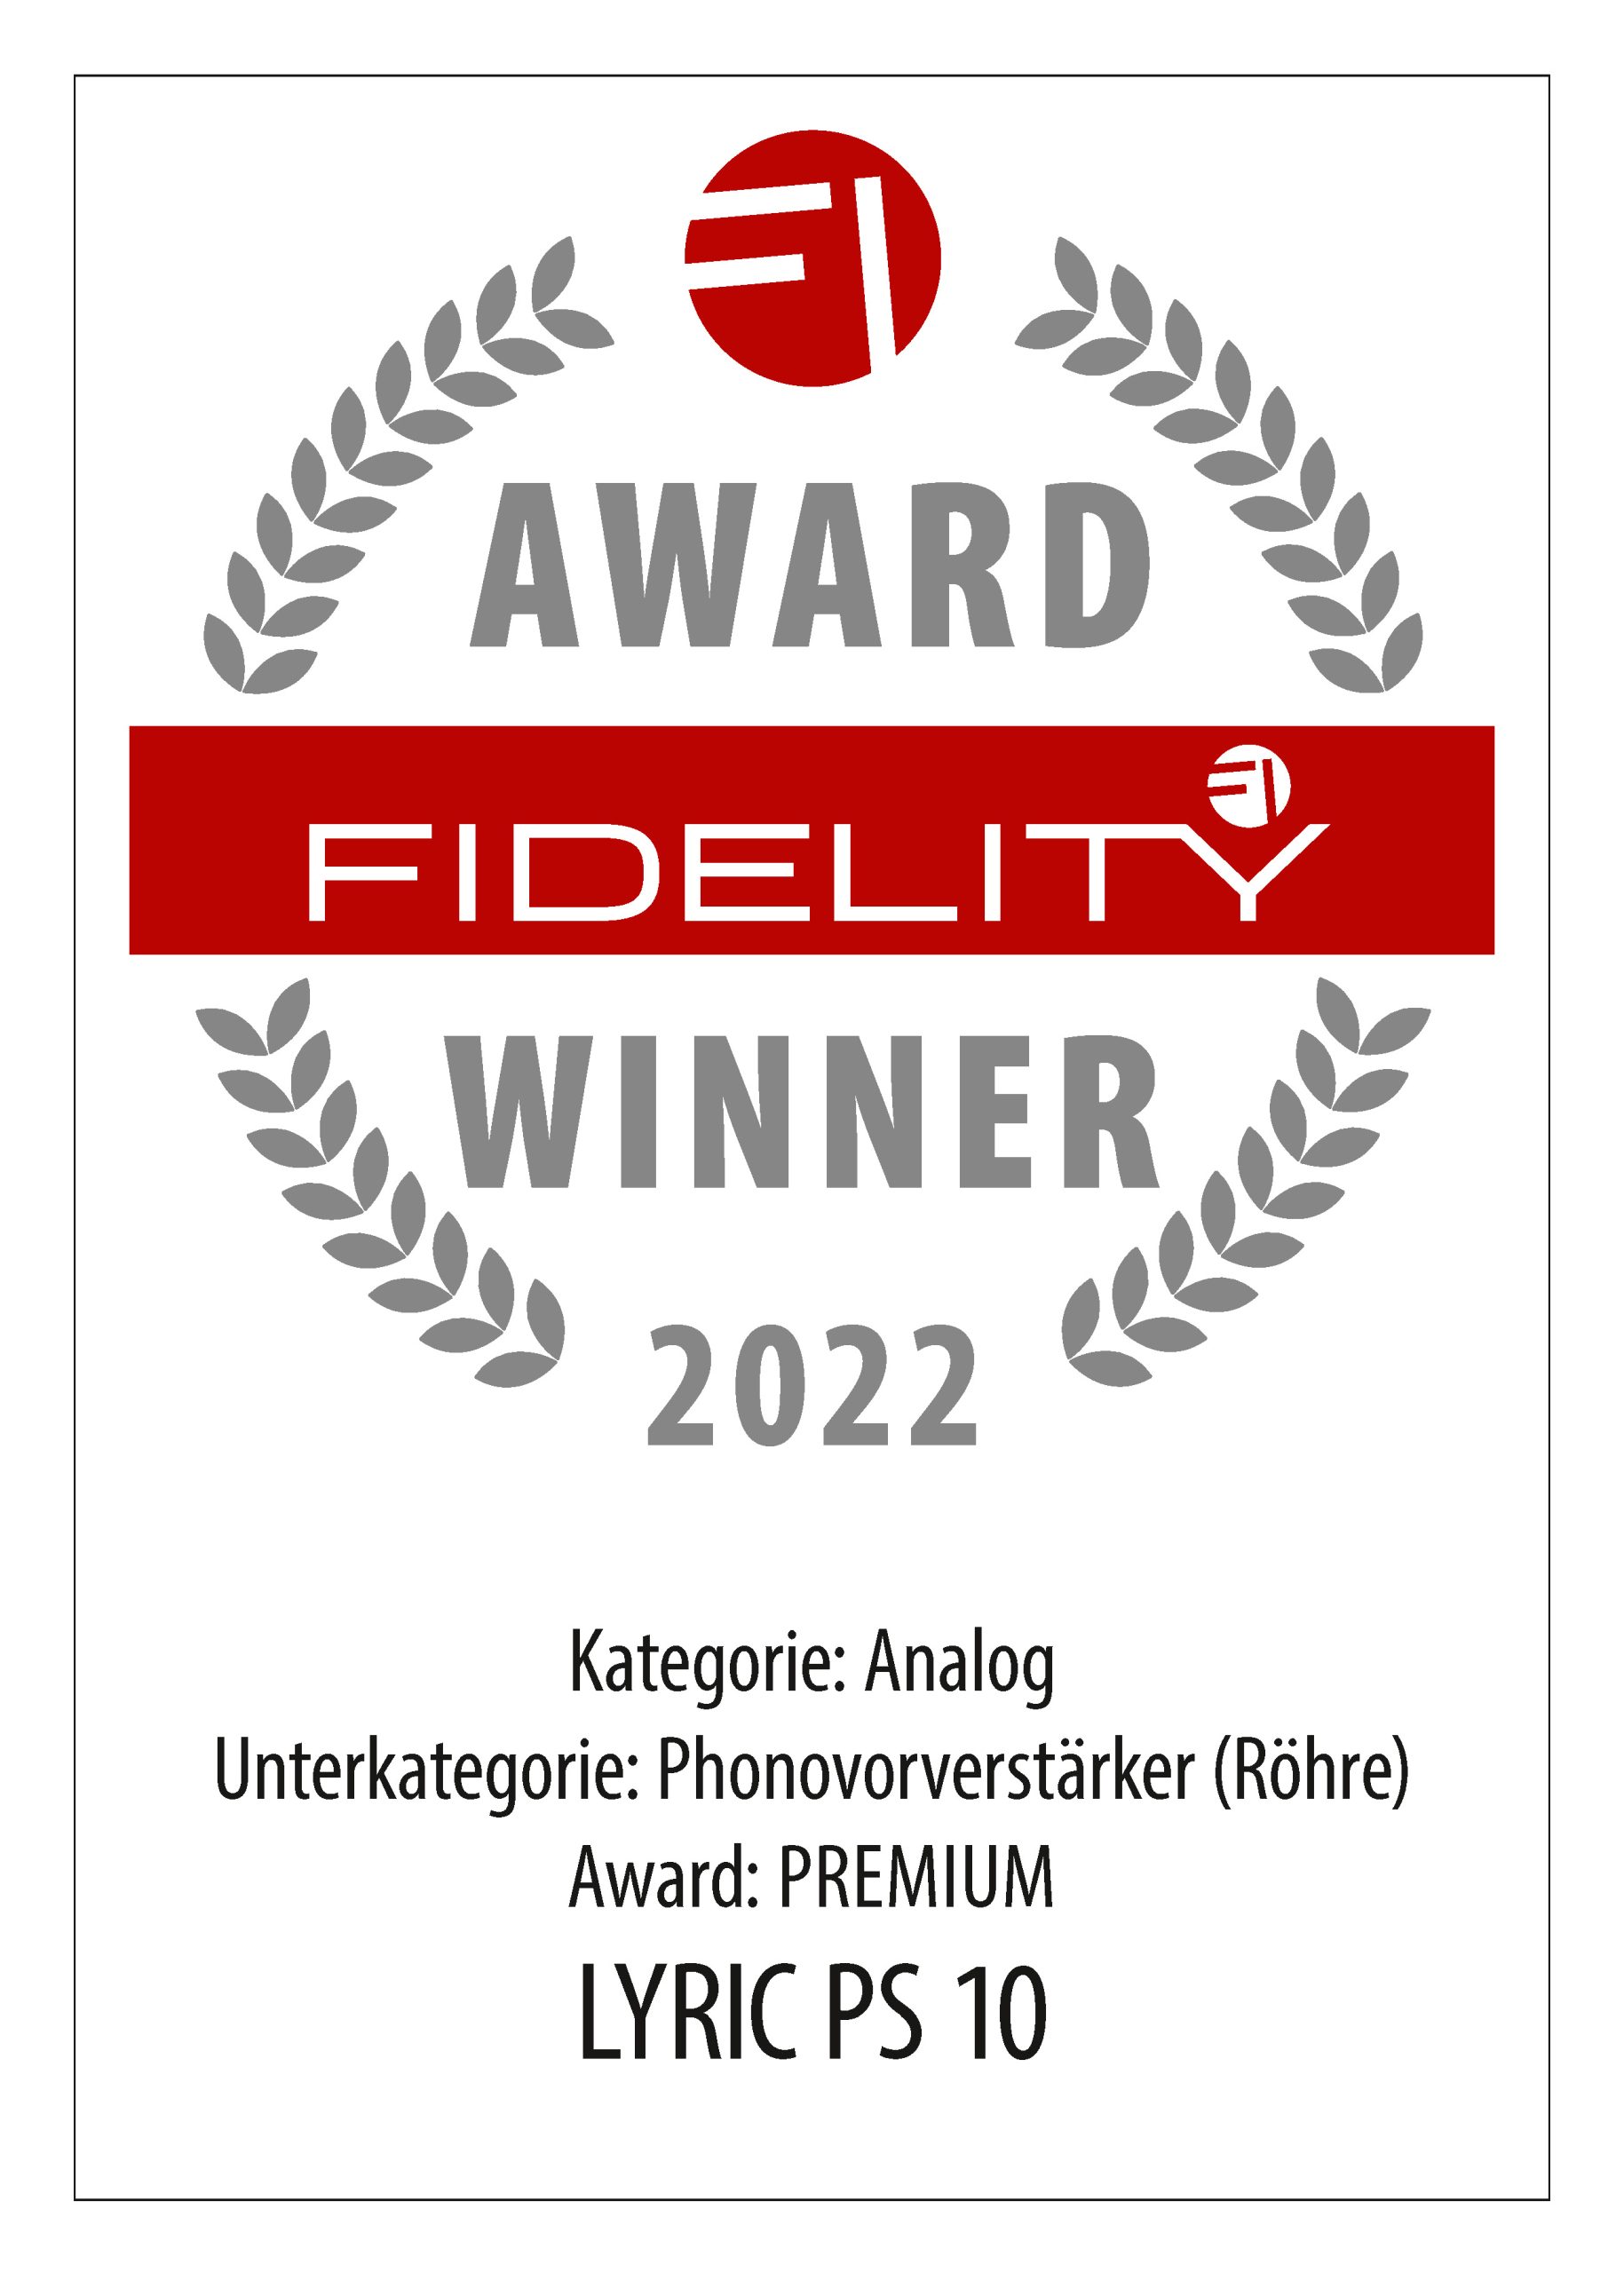 FIDELITY Award Premium: PS 10 - 2022